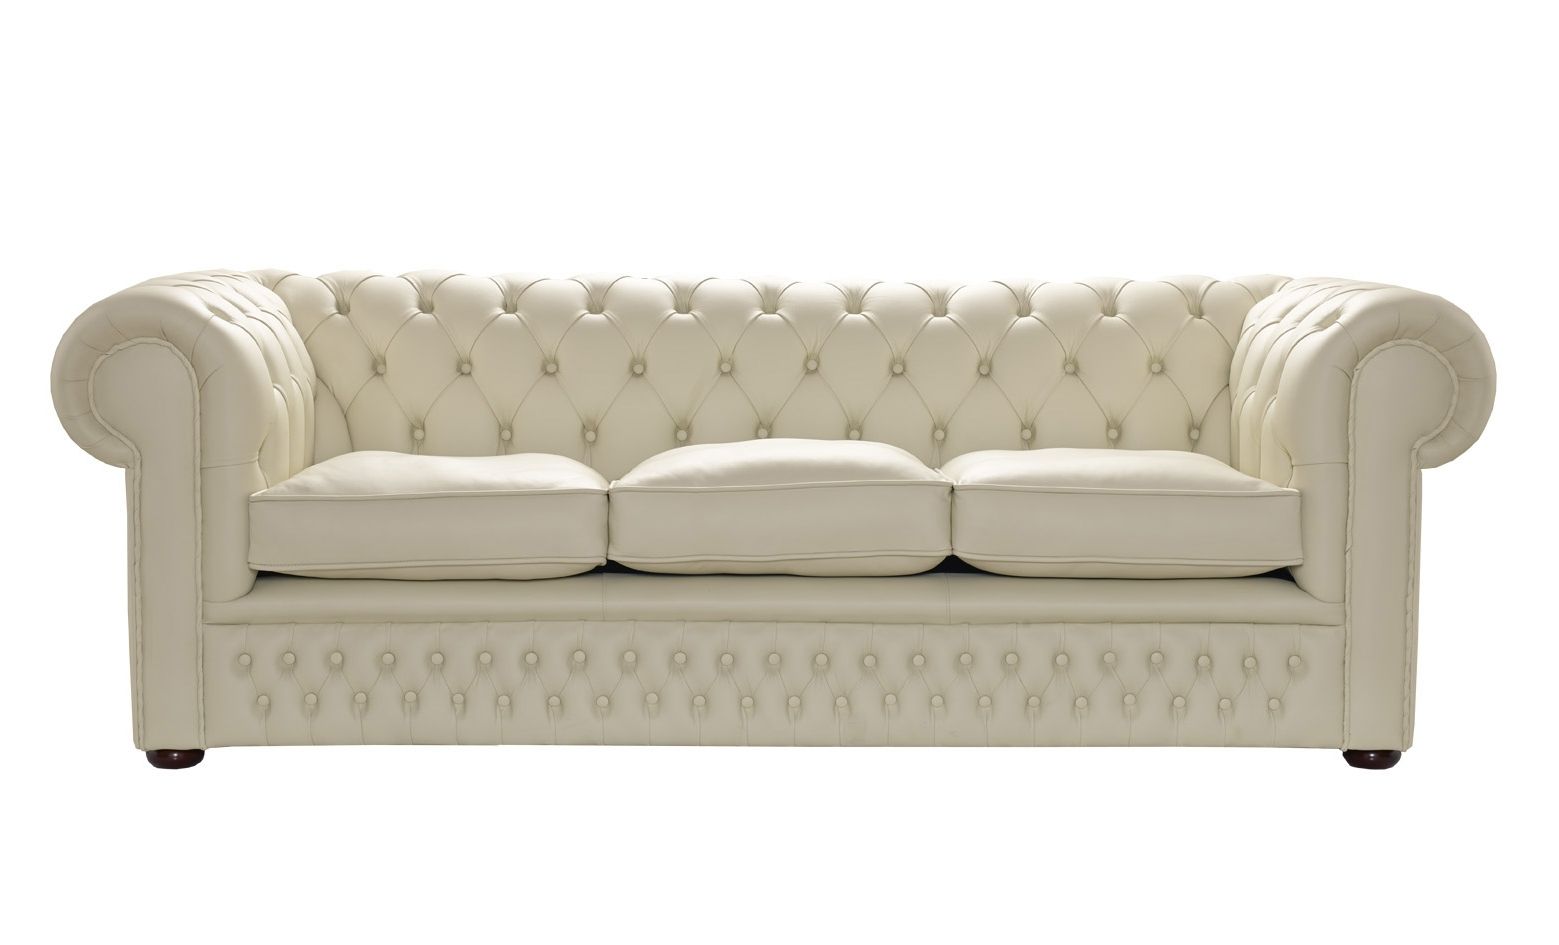 Great Cream Colored Sofa 84 With Additional Sofa Room Ideas With Within 2017 Cream Colored Sofas (View 13 of 15)